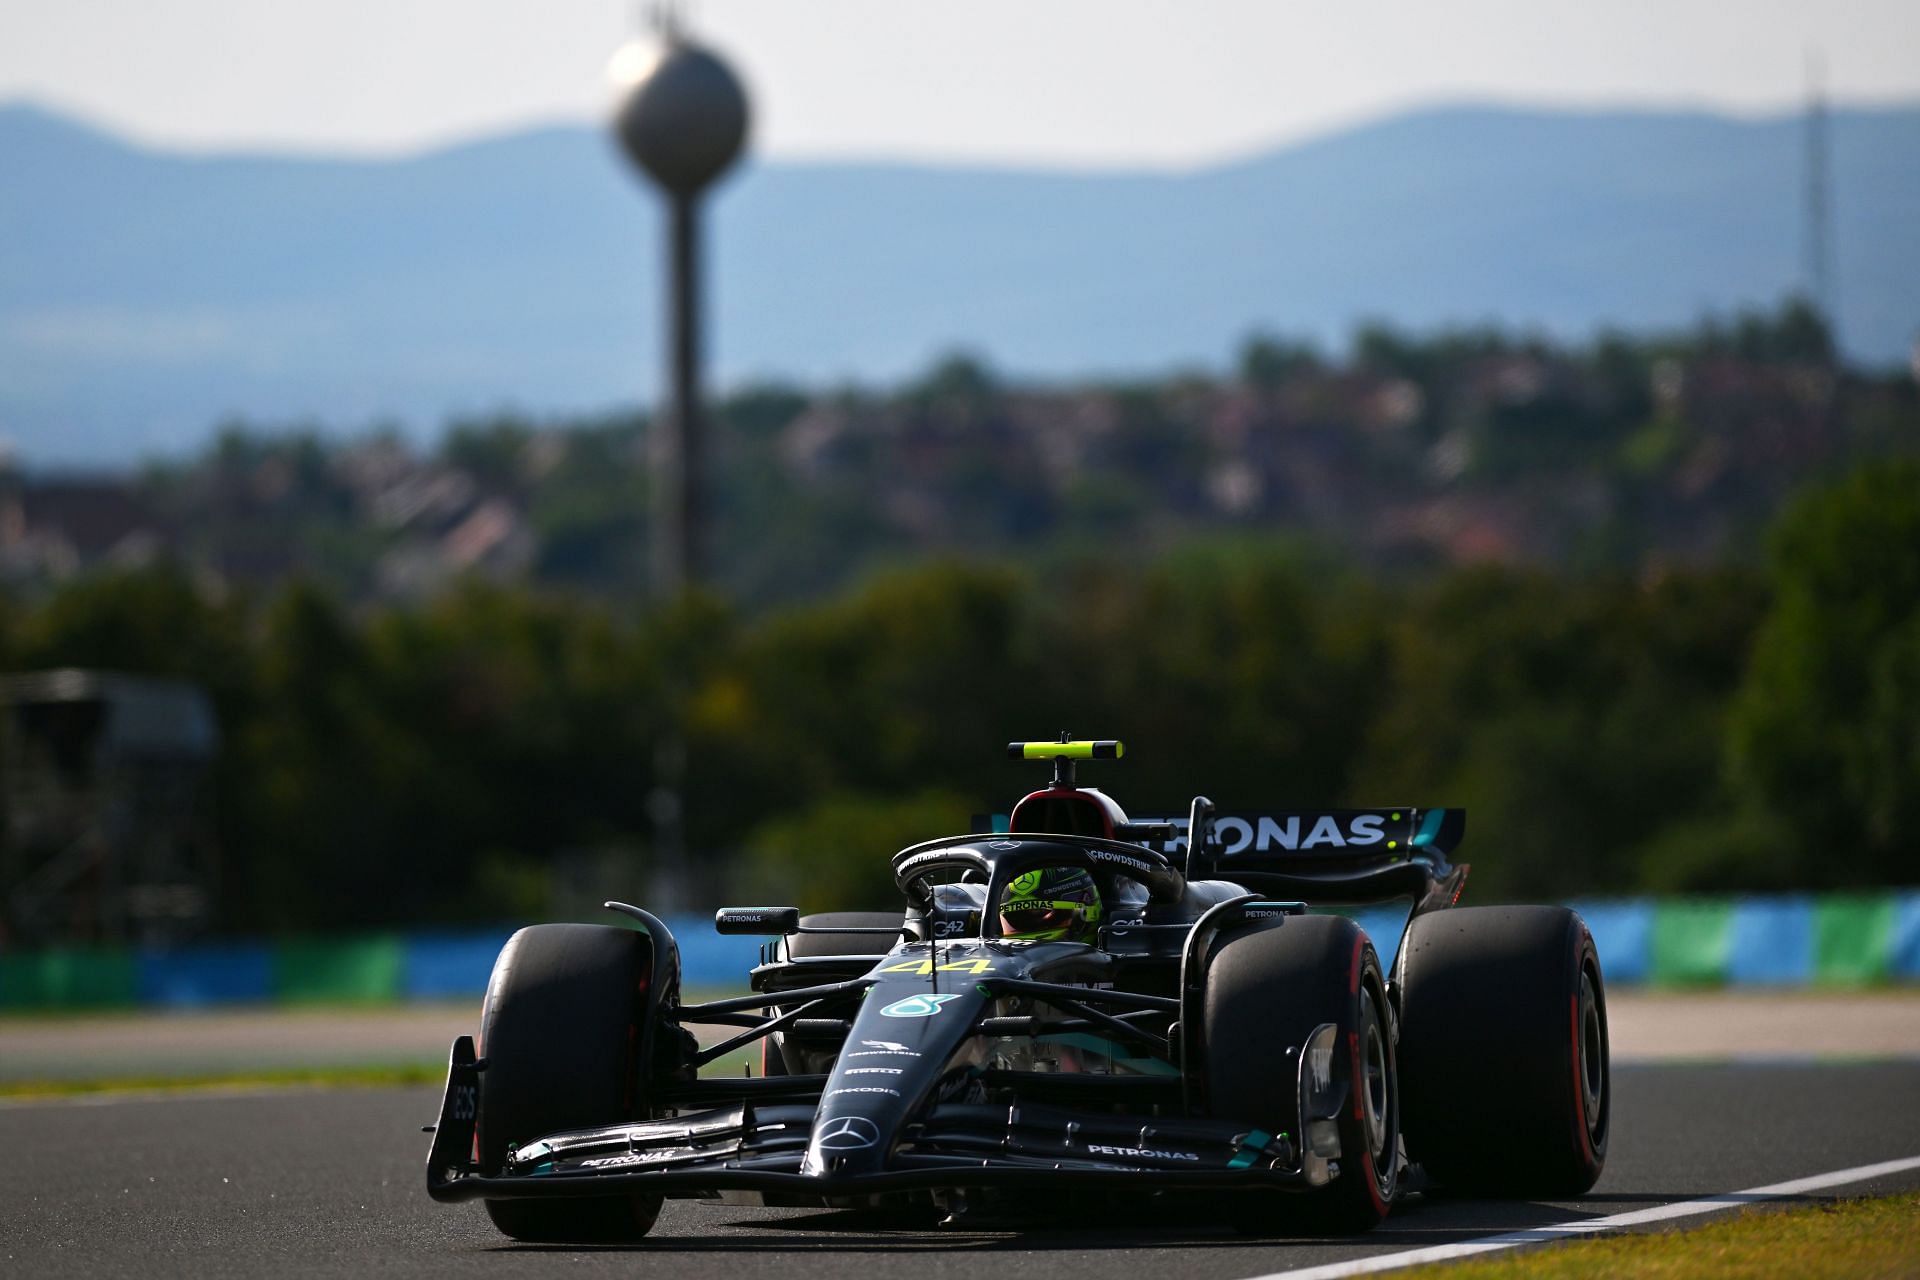 2023 F1 Hungary GP Full starting grid for Sunday’s main race in Budapest